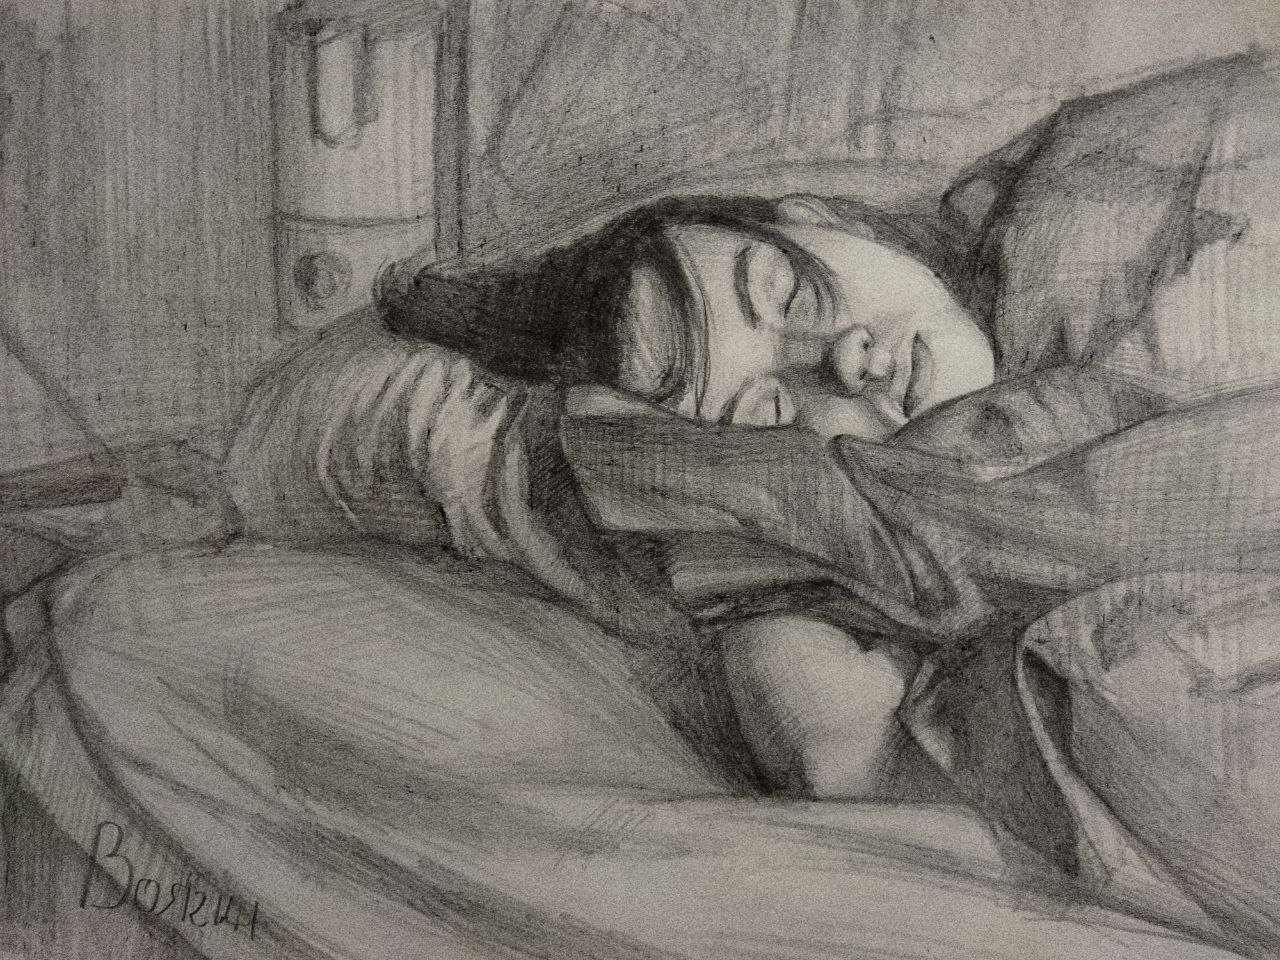 Sketch sleep by Cradenceti on DeviantArt